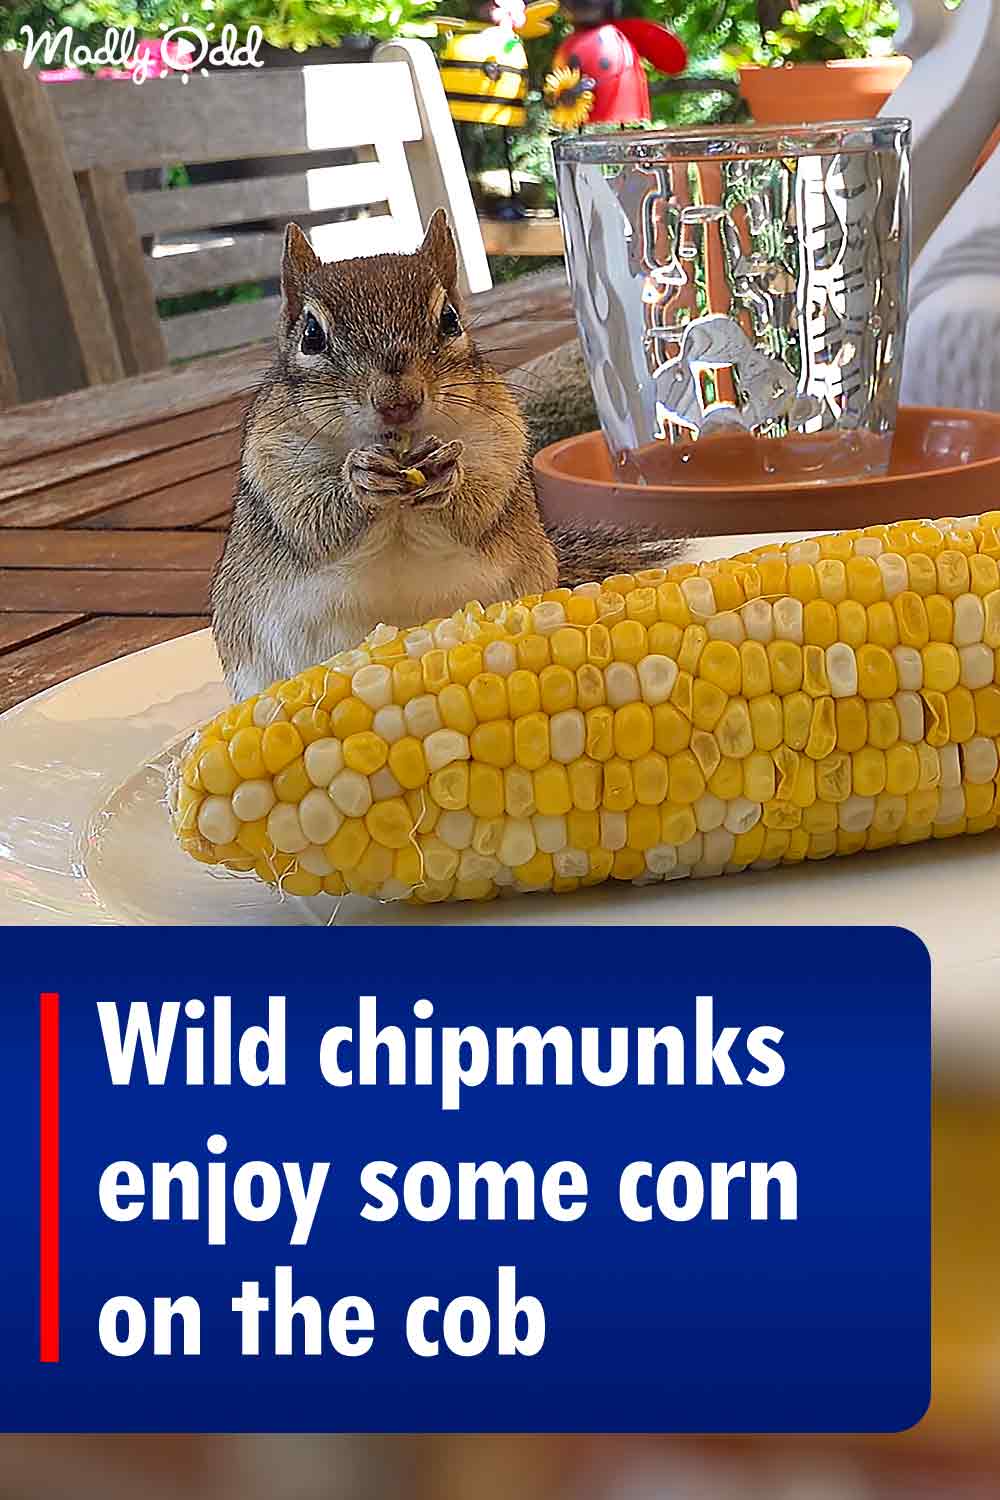 Wild chipmunks enjoy some corn on the cob